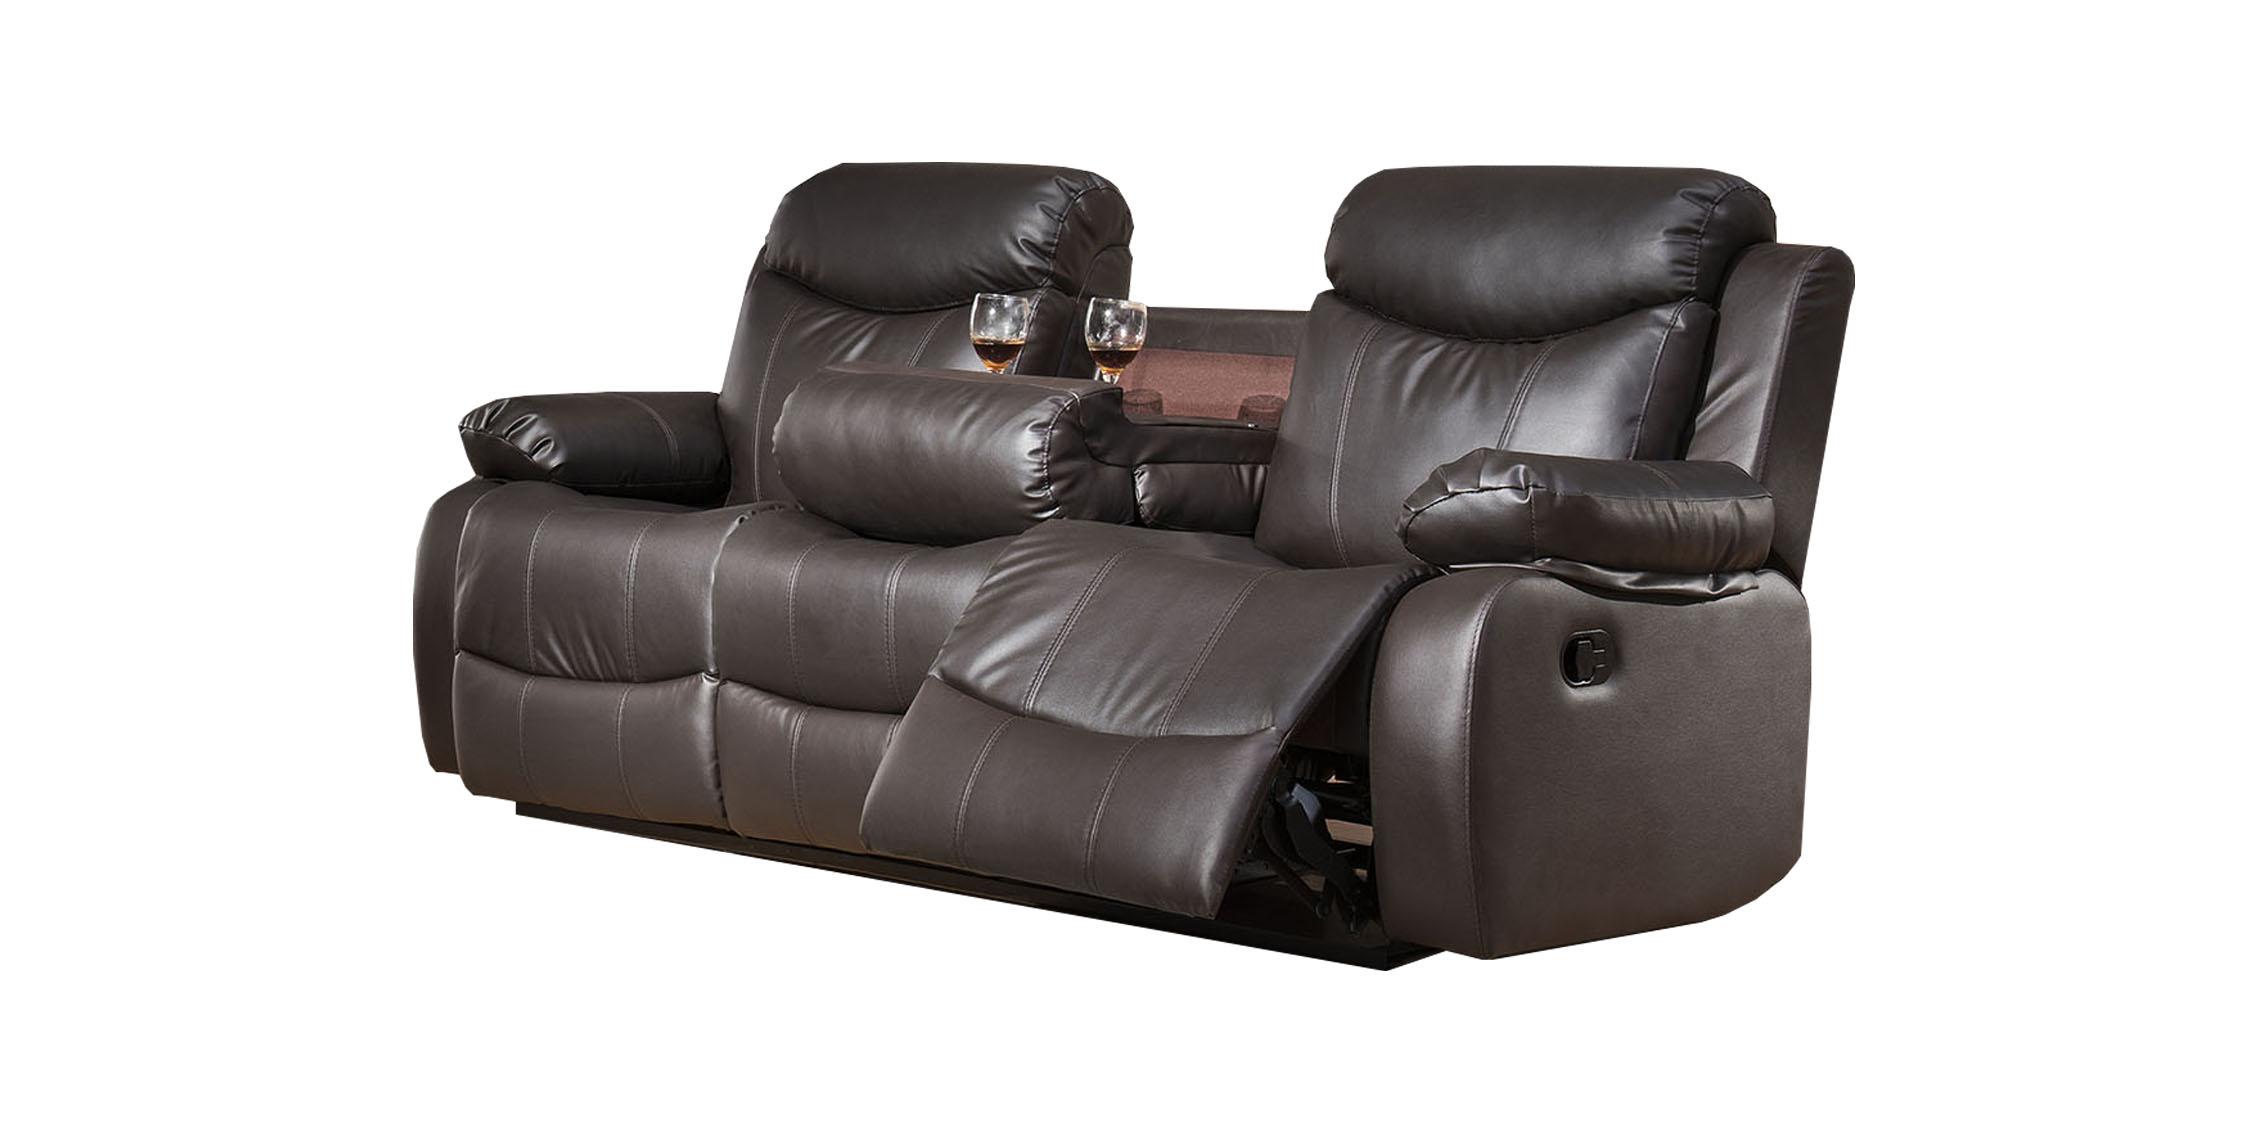 

    
McFerran SF3558-S Contemporary Dark Brown PU Material Dual Recliners Sofa
